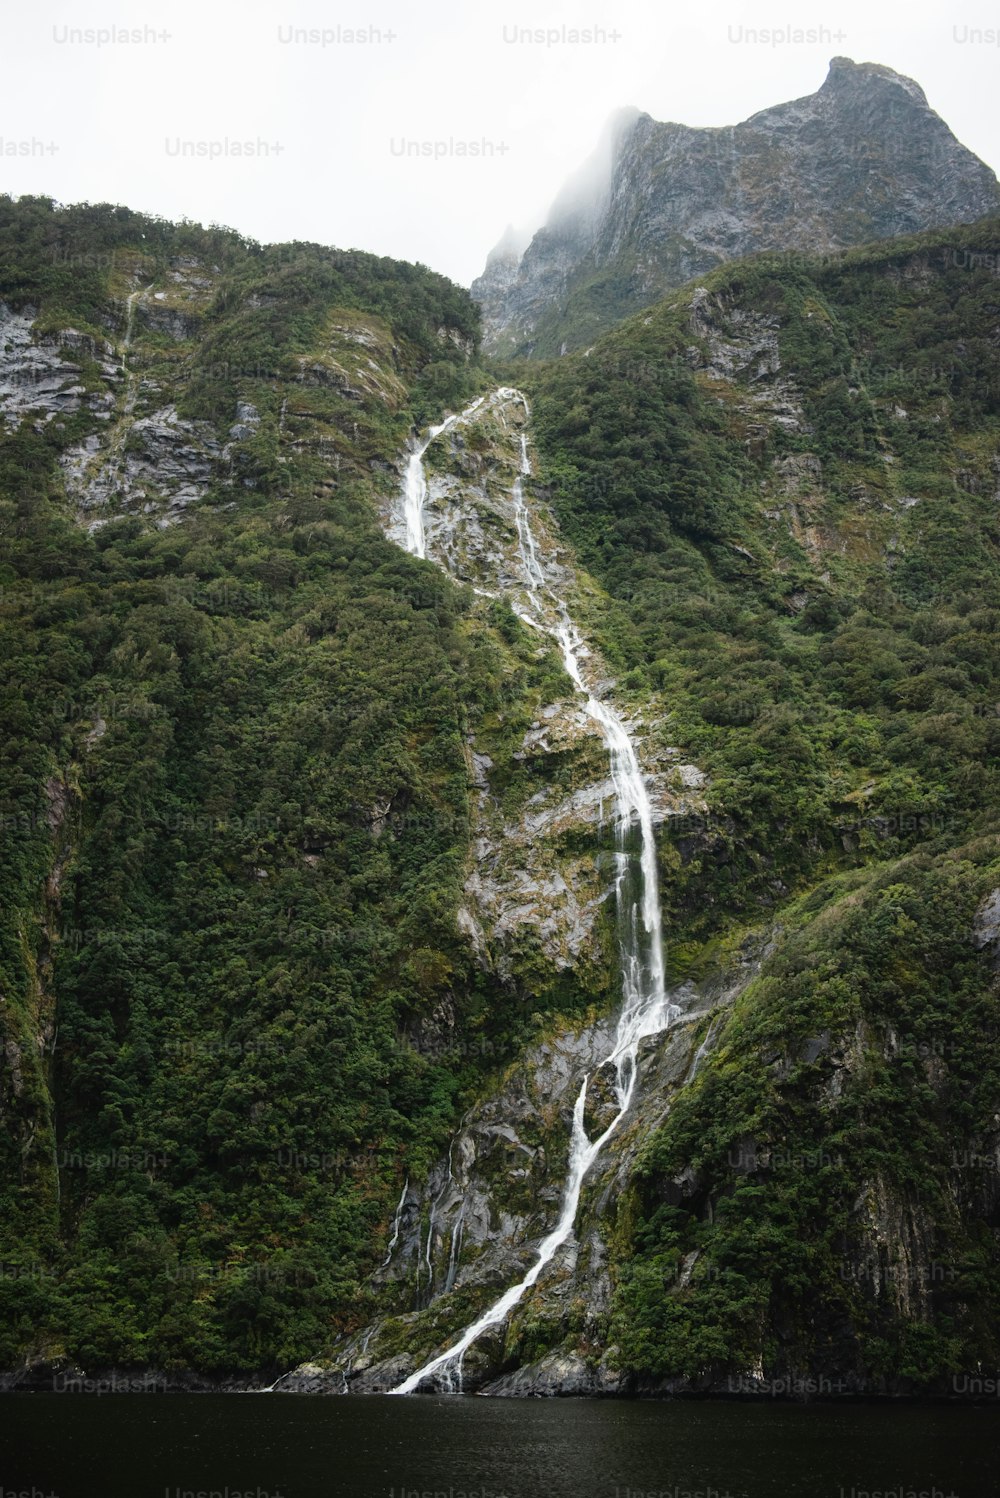 Una cascata in una montagna